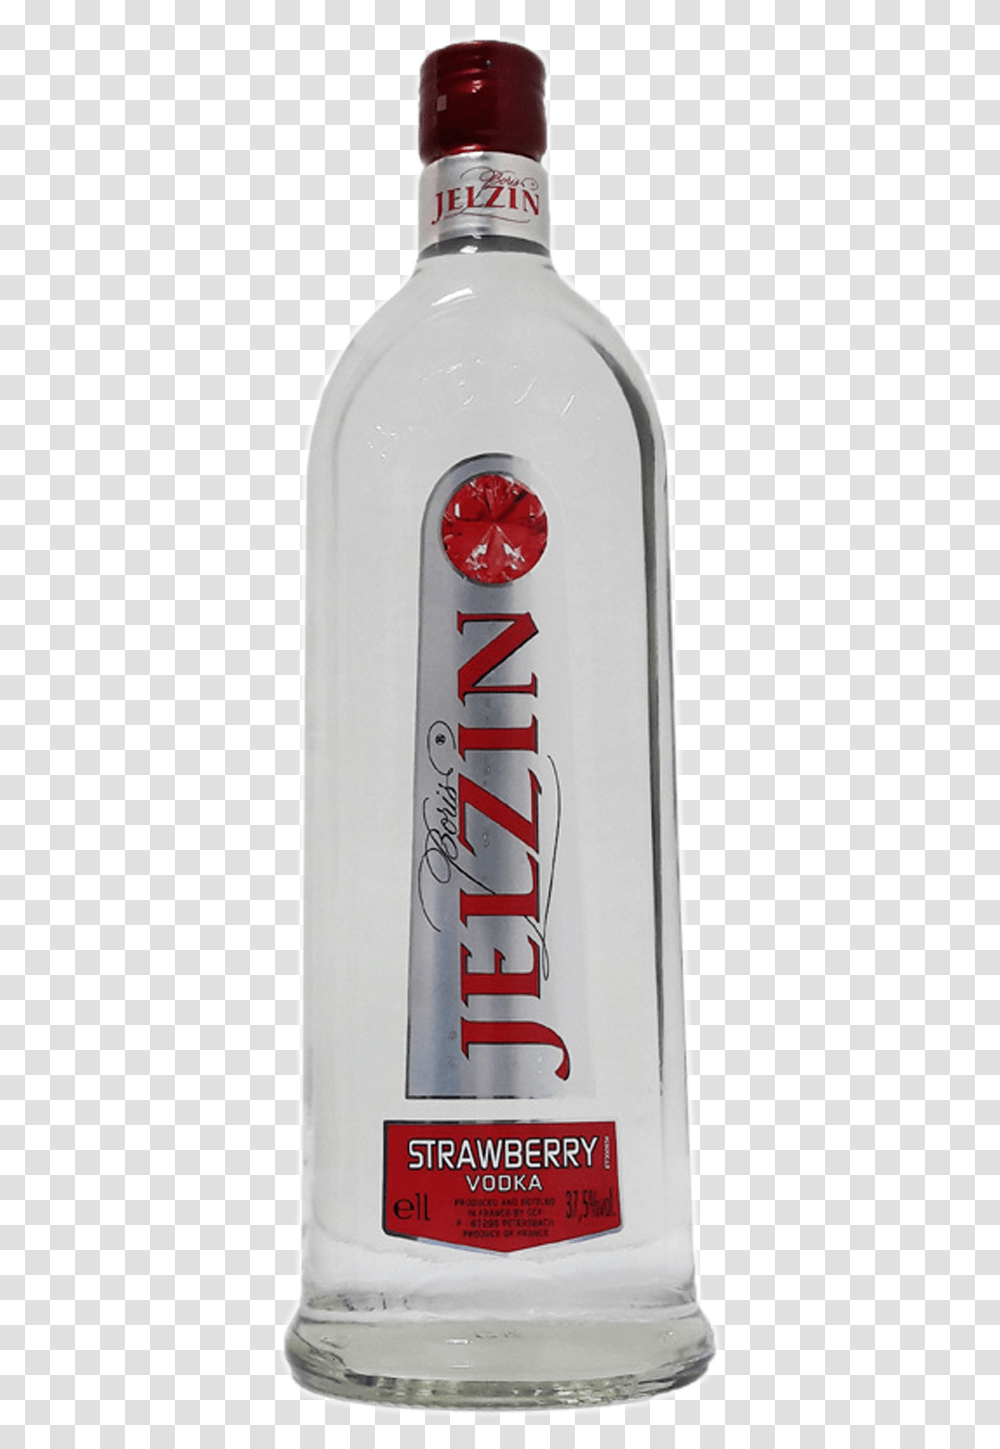 Jelzin Vodka Strawberry, Beverage, Drink, Alcohol, Liquor Transparent Png